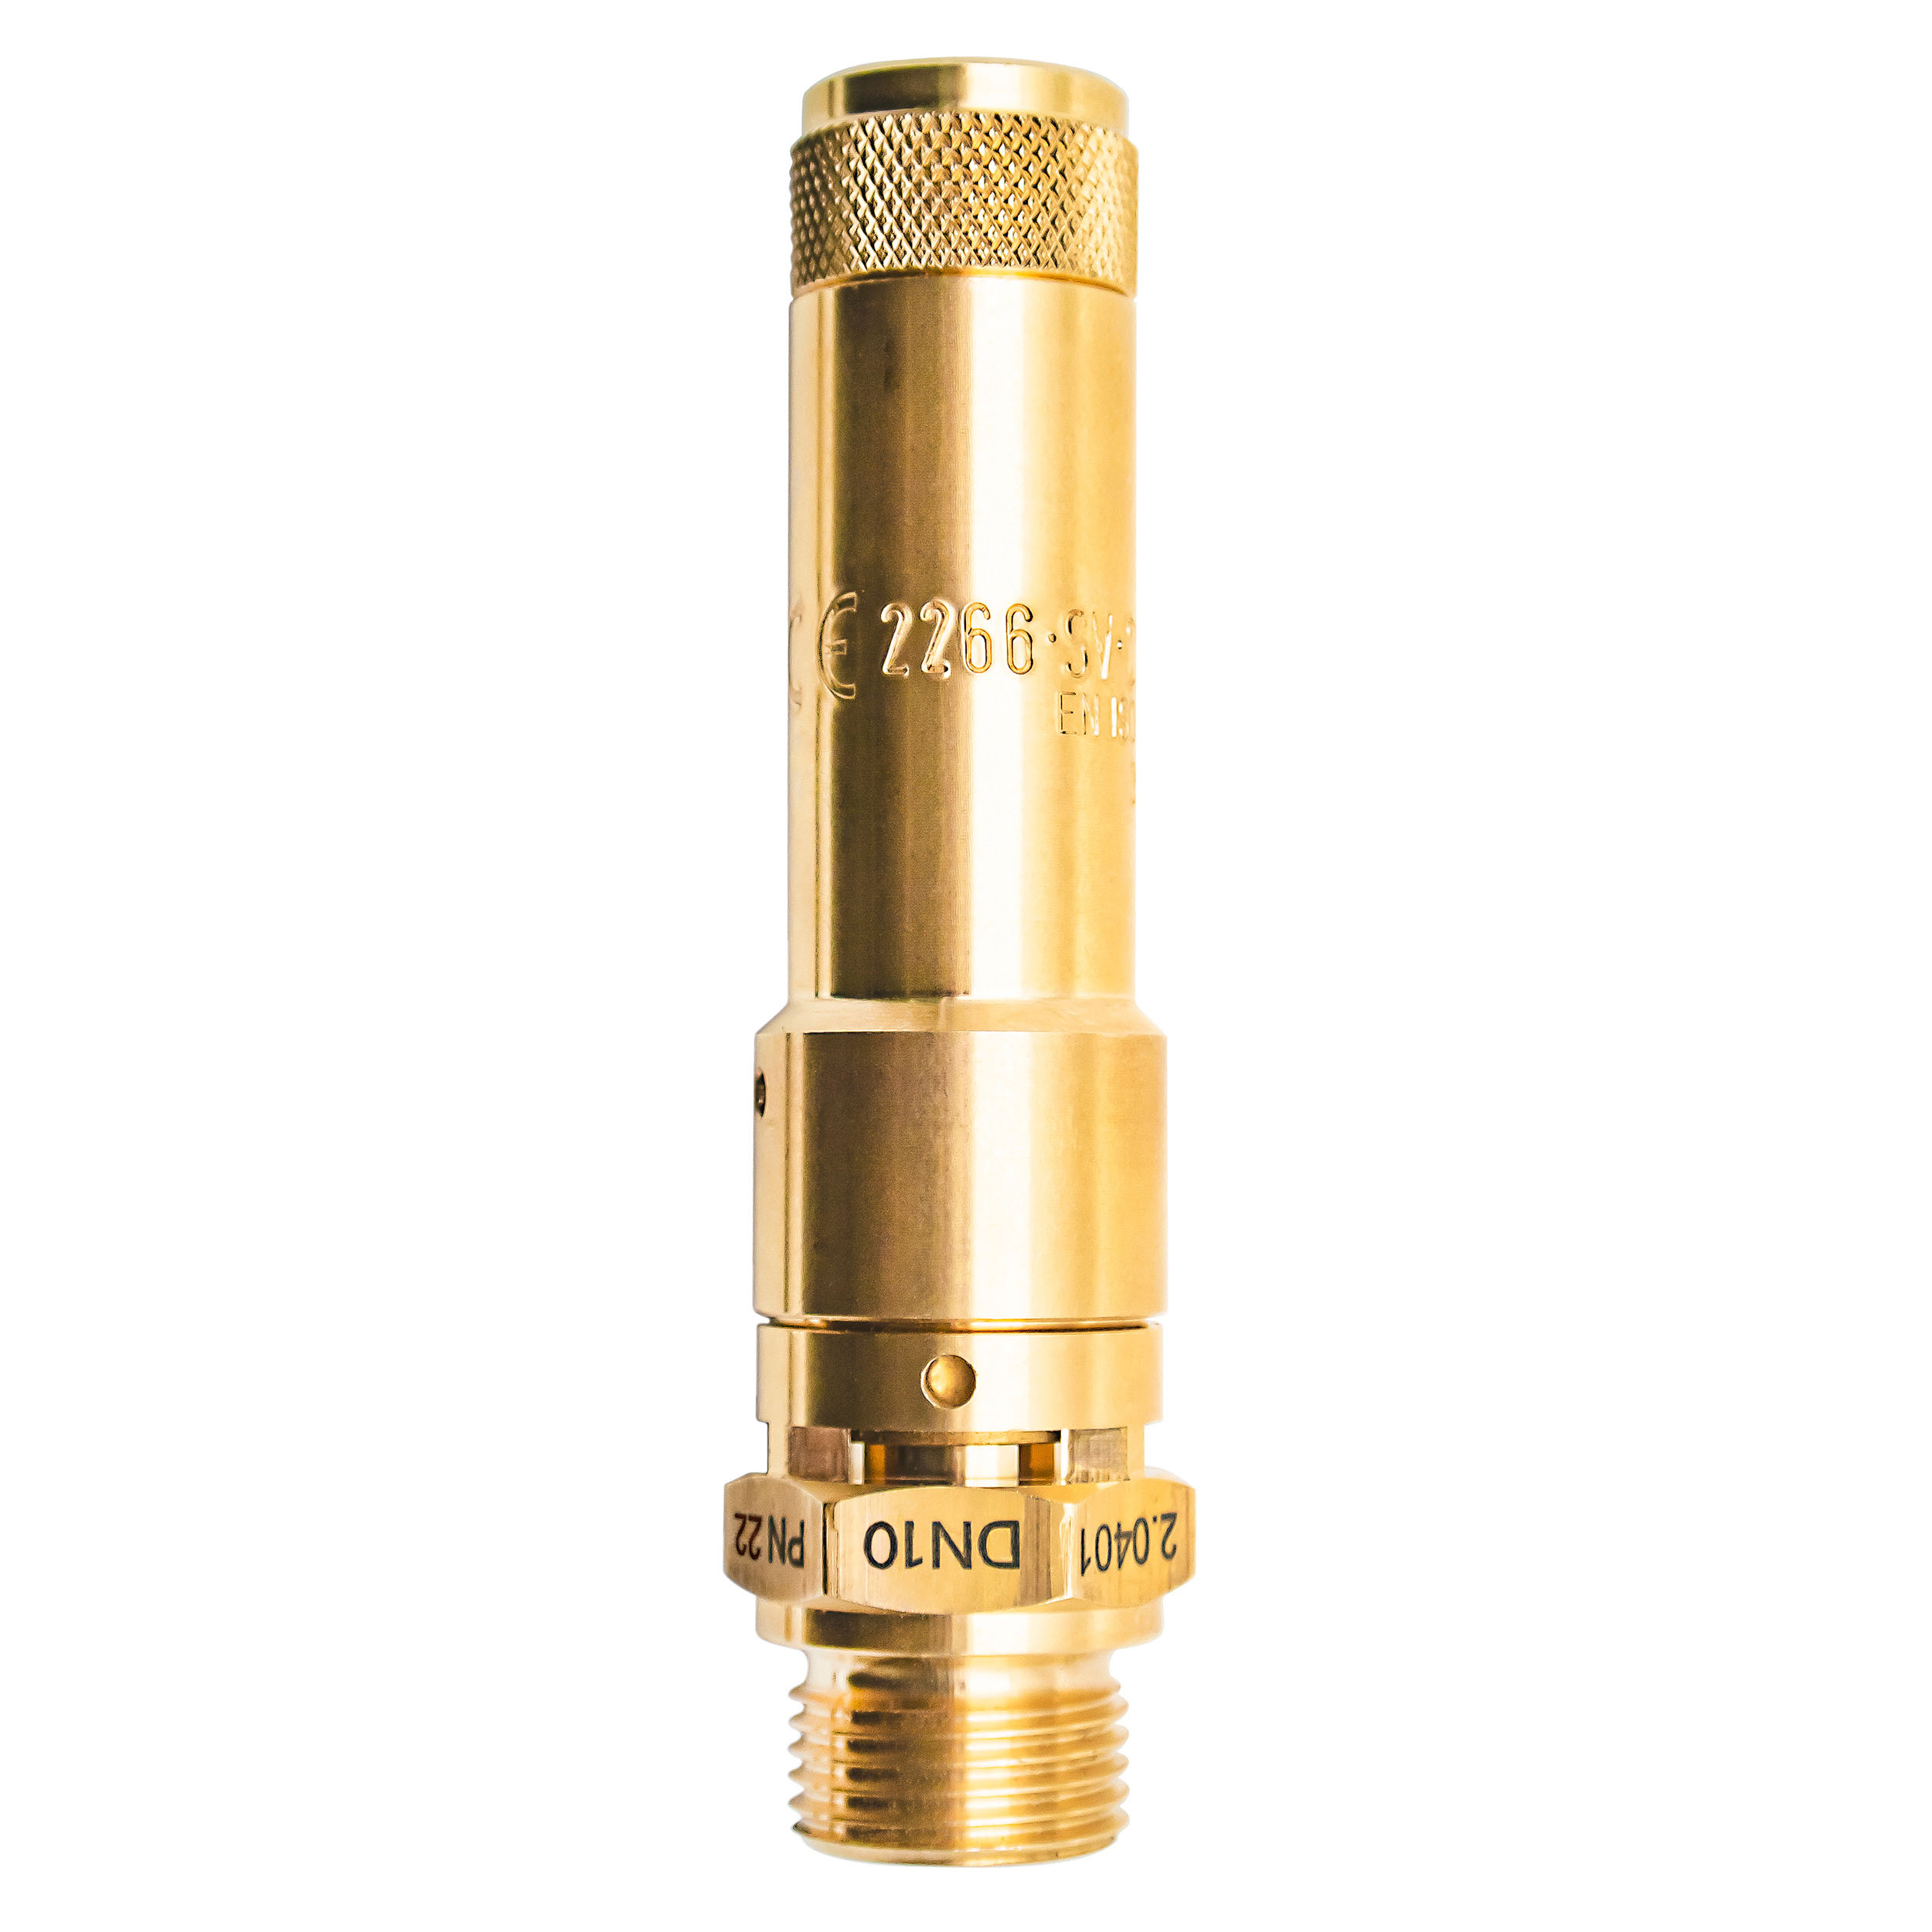 Savety valve component tested DN 10, G¾, set pressure: 7.6 bar (110,2 psi)